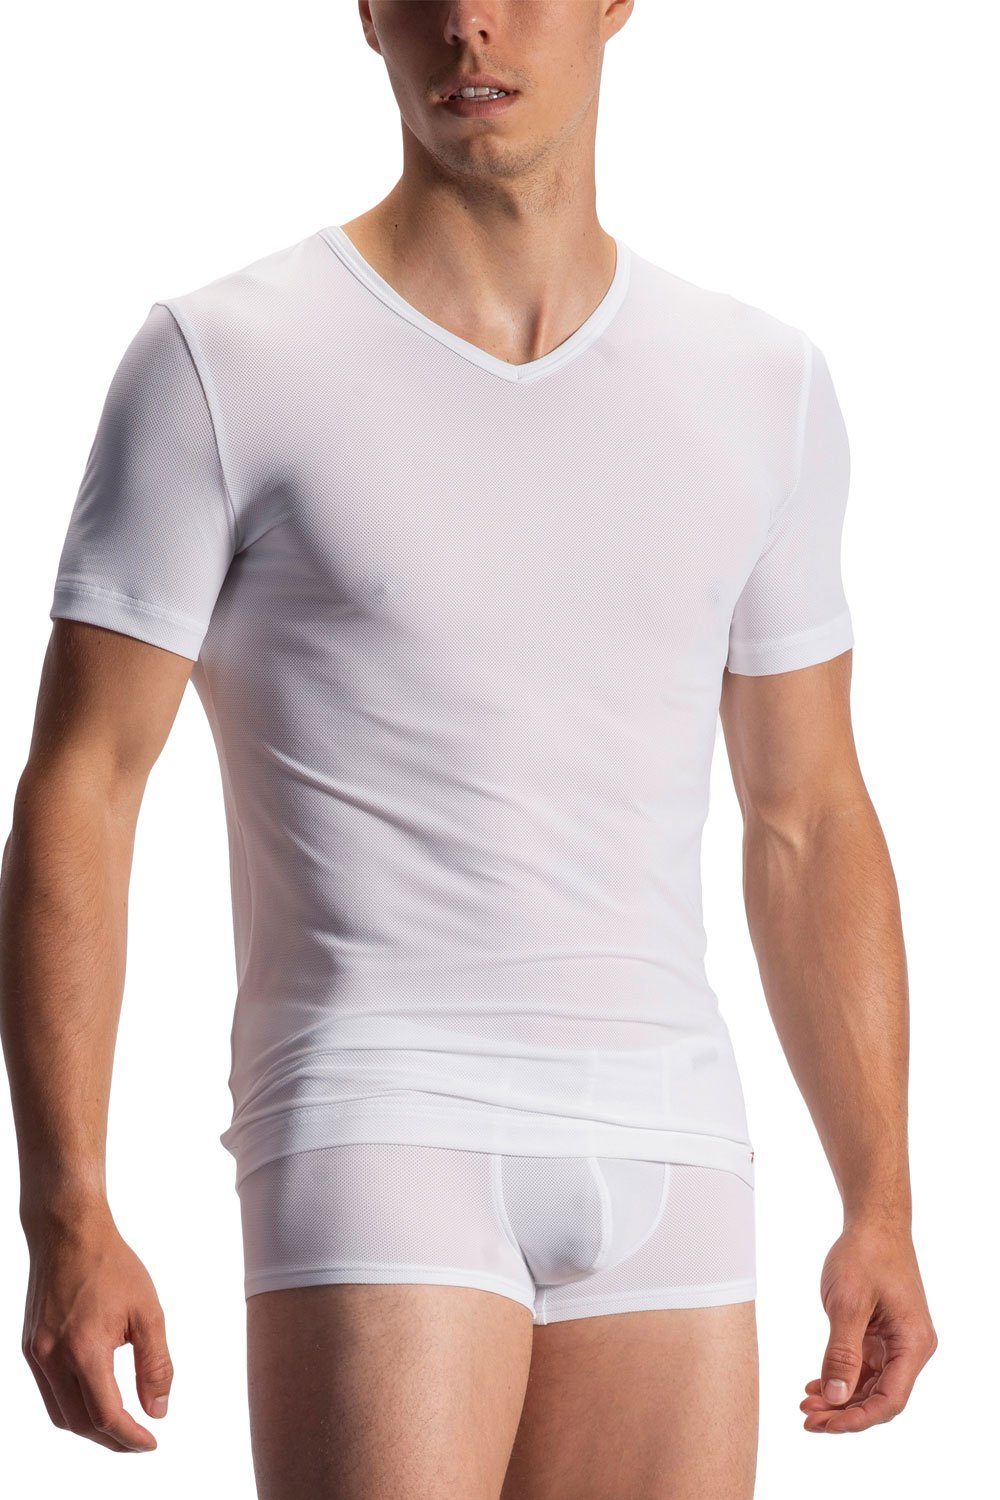 Benz V-Neck white T-Shirt (Reg) Shirt 108404 Olaf